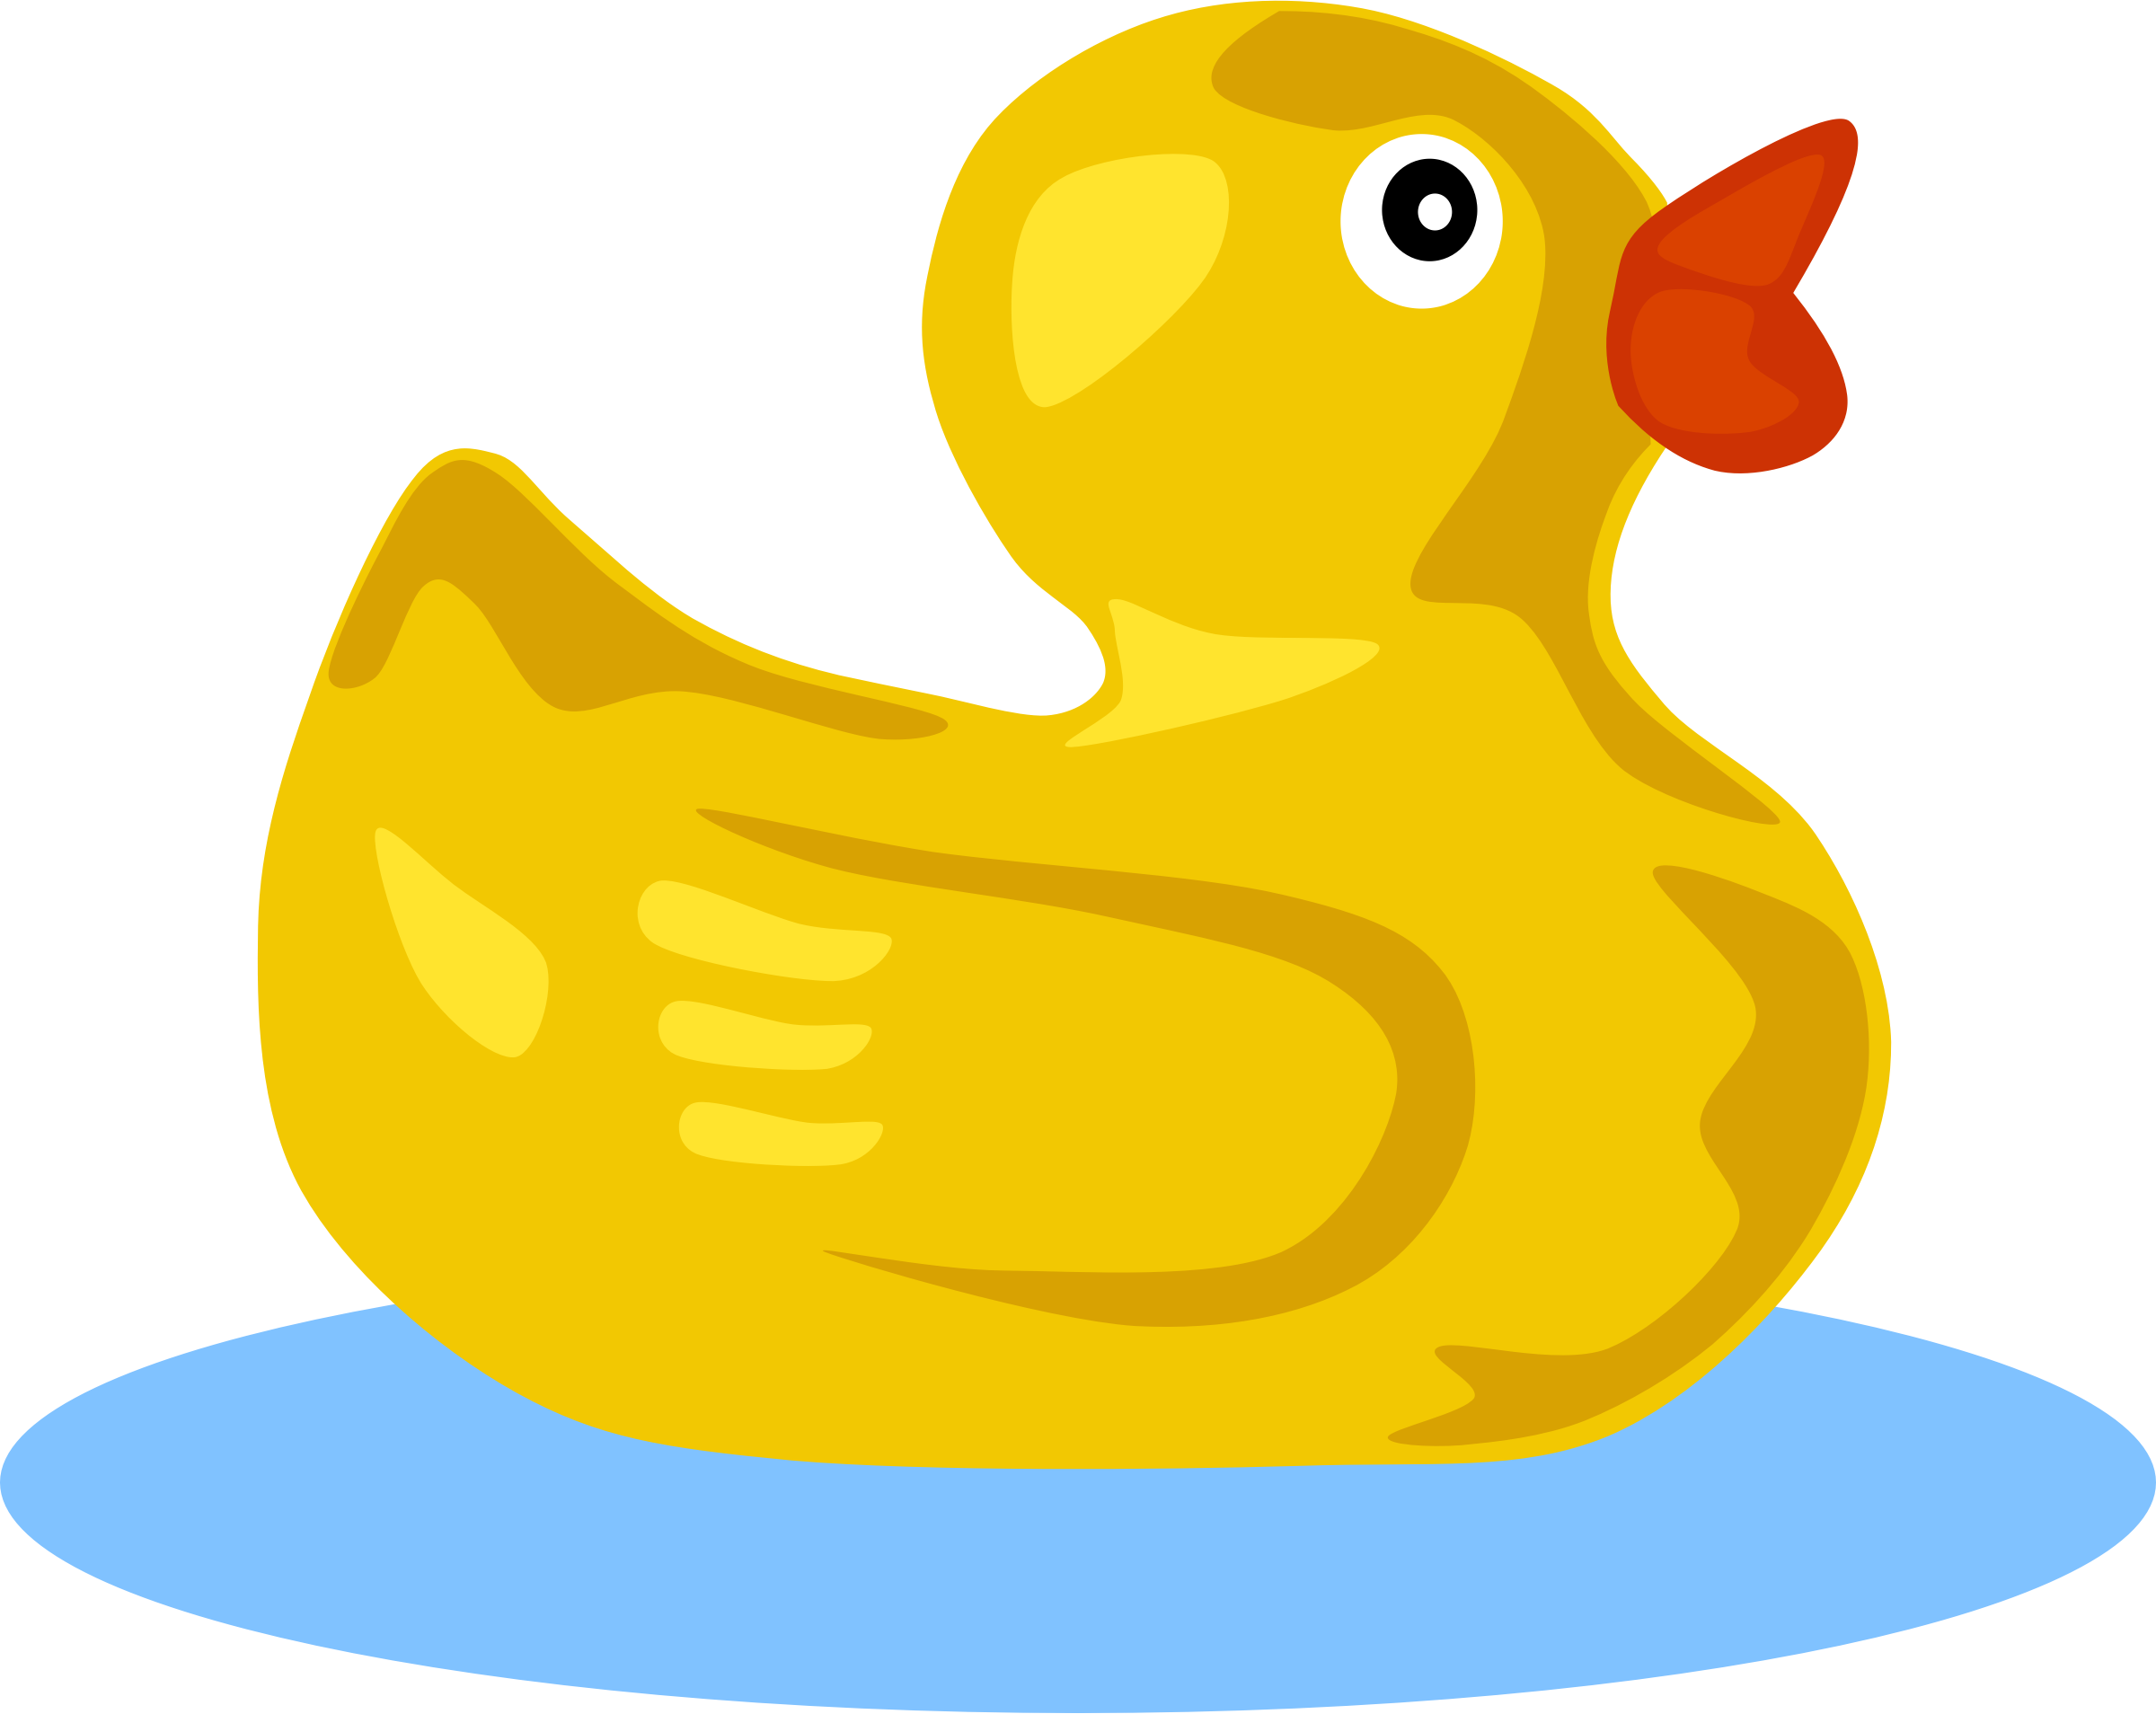 Rubber duck big image. Duckling clipart quack